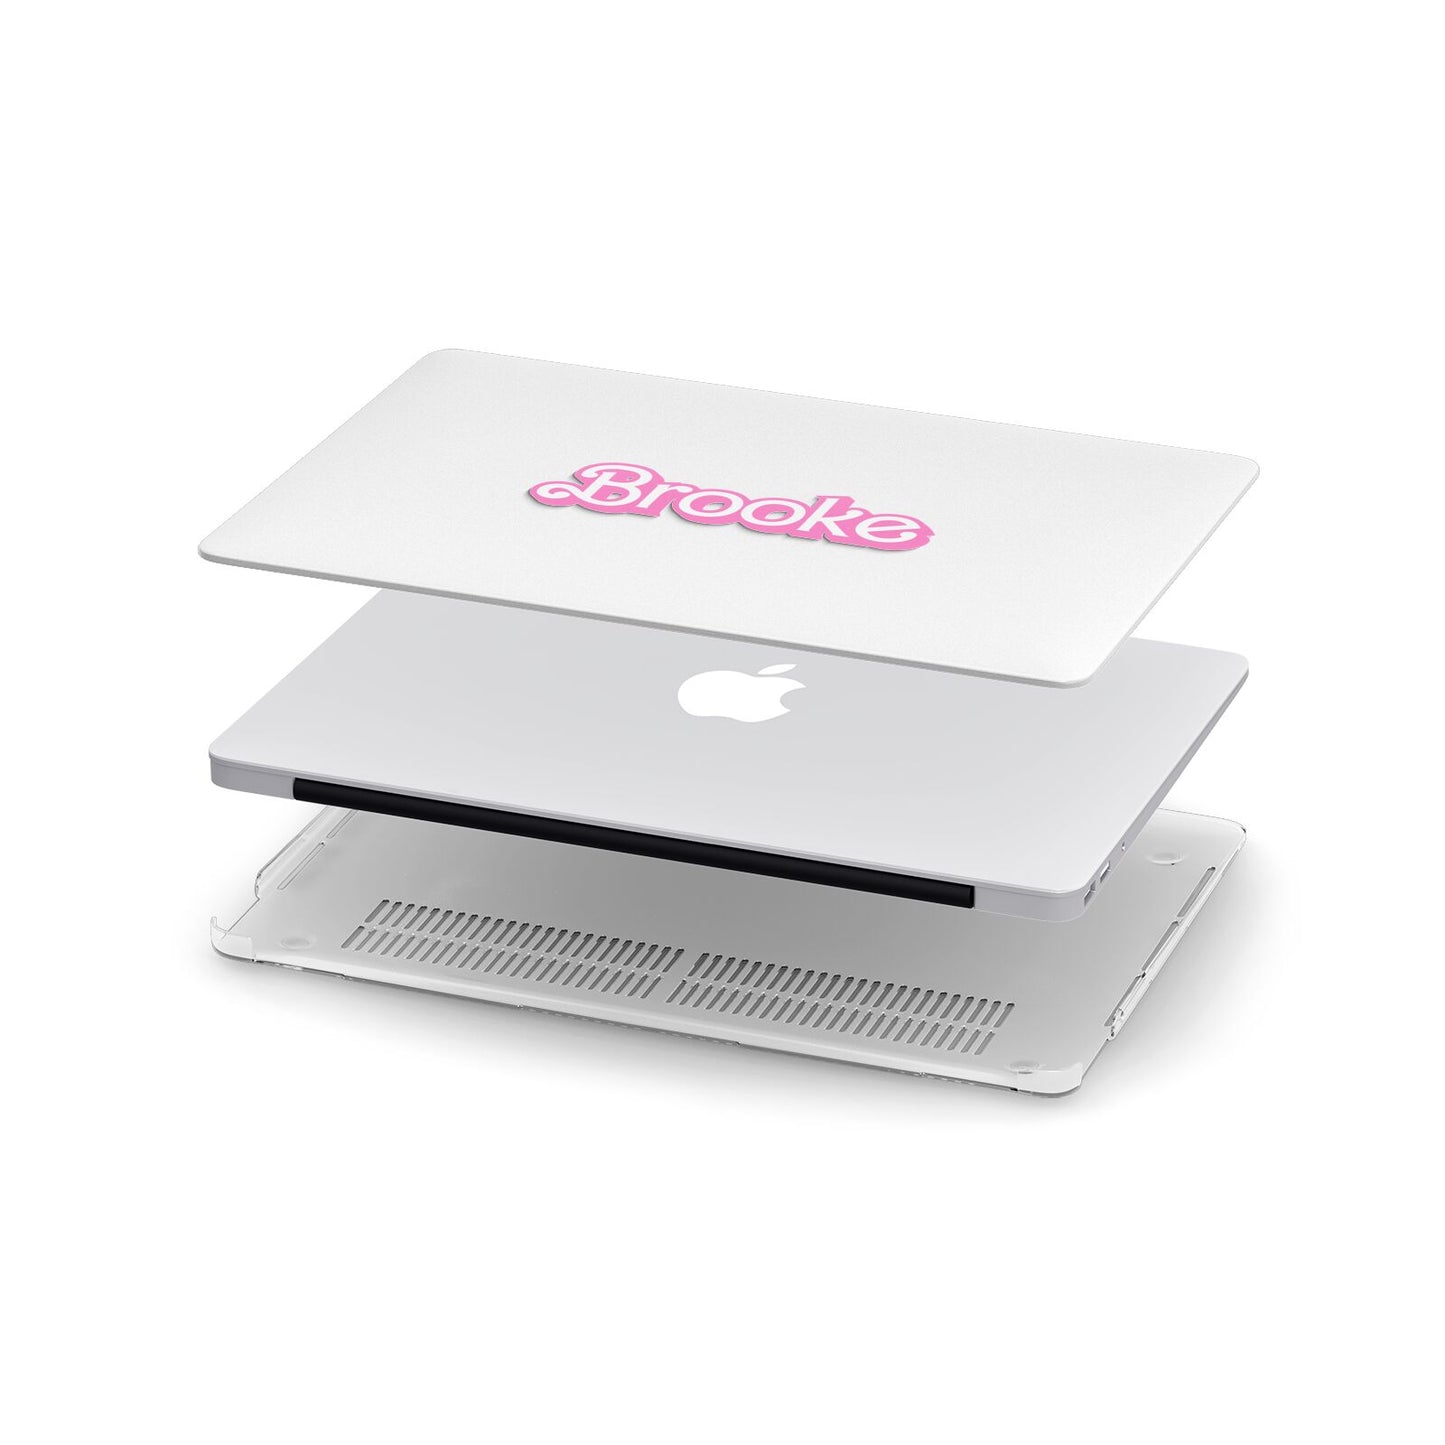 Dream Name Apple MacBook Case in Detail